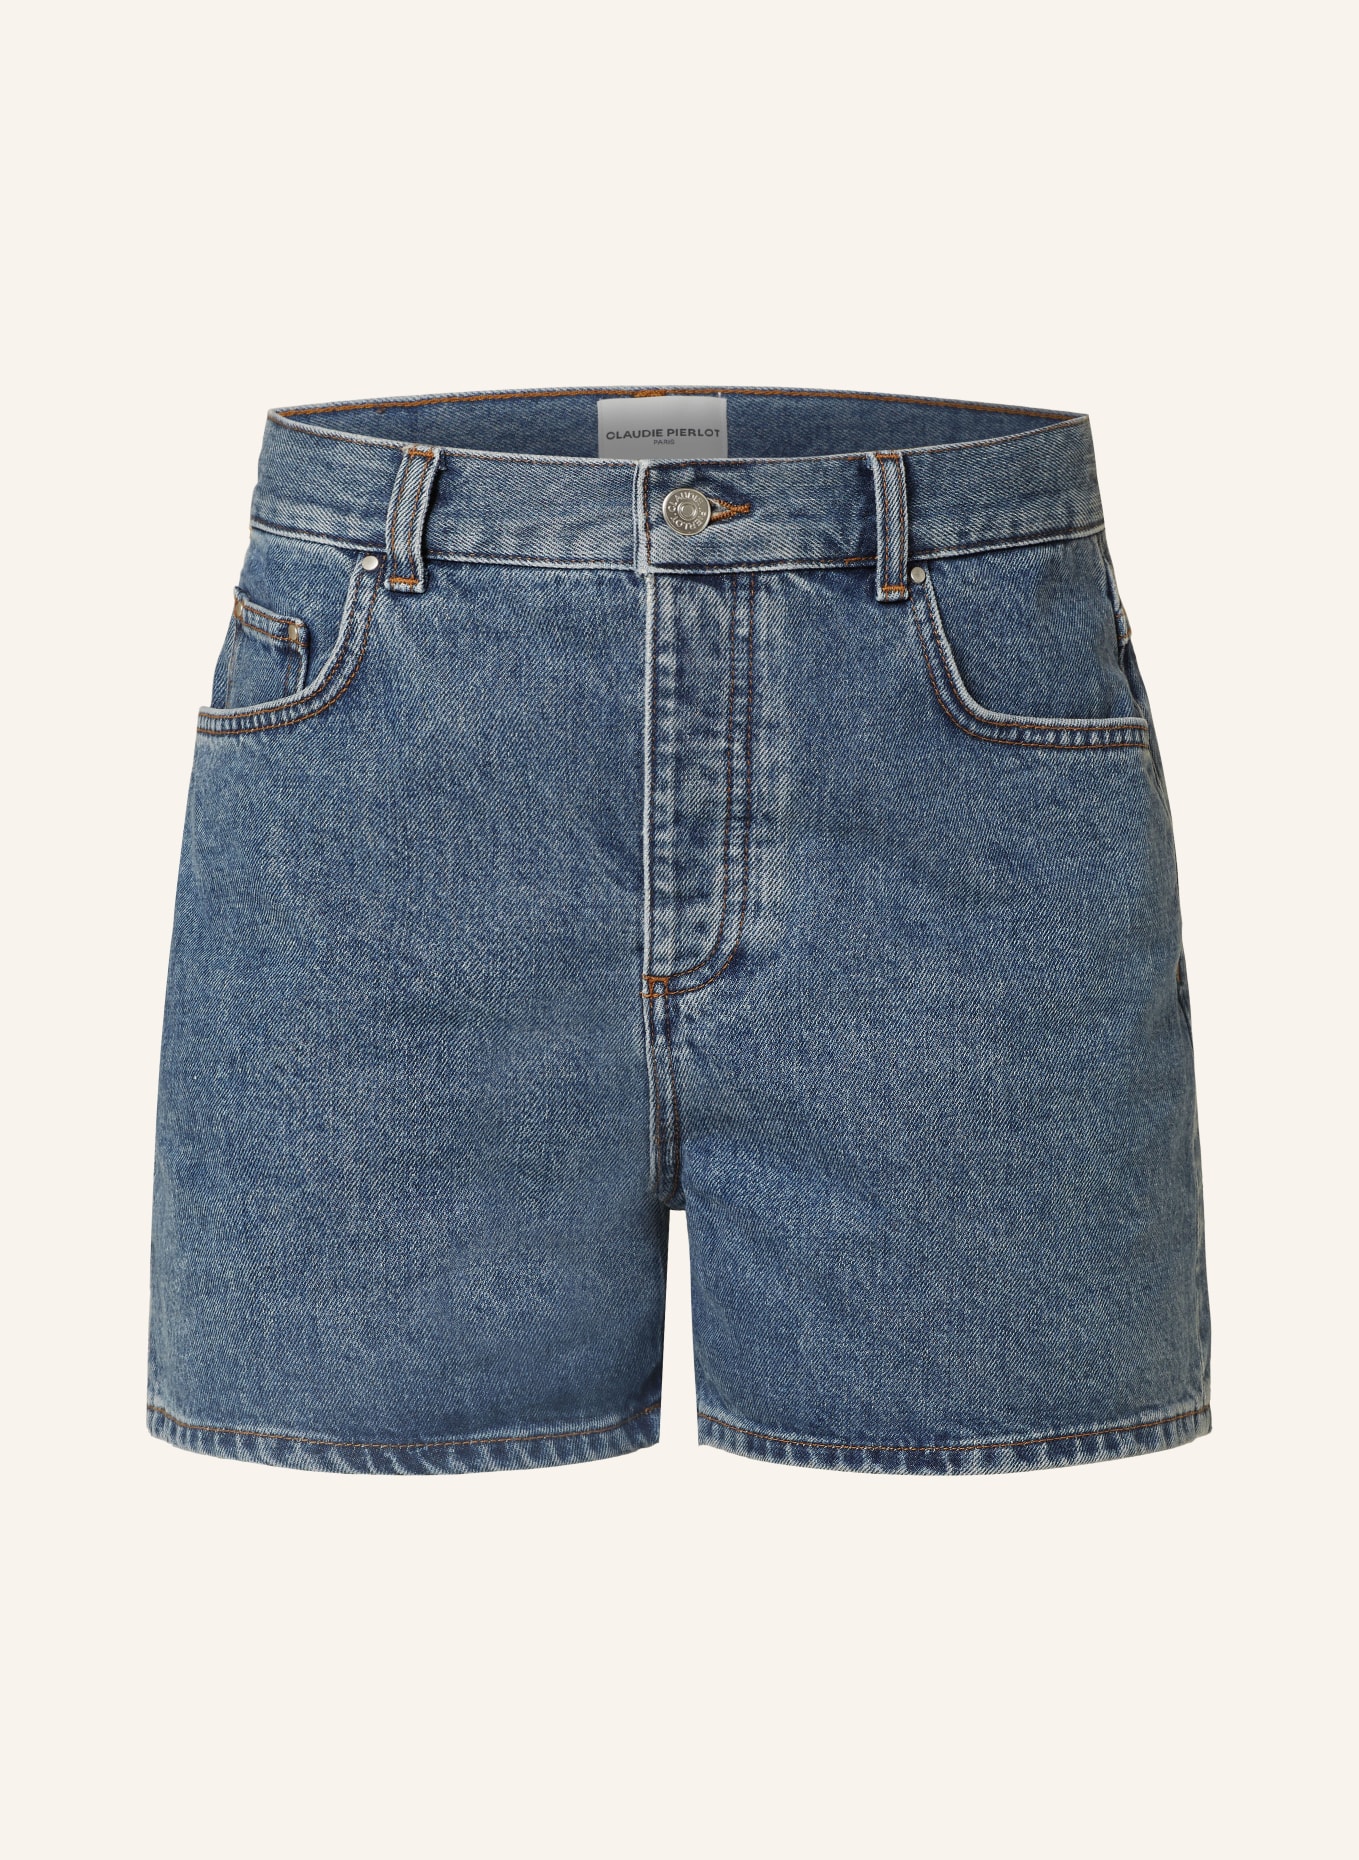 CLAUDIE PIERLOT Jeanshorts, Farbe: D031 DENIM MID BLUE (Bild 1)